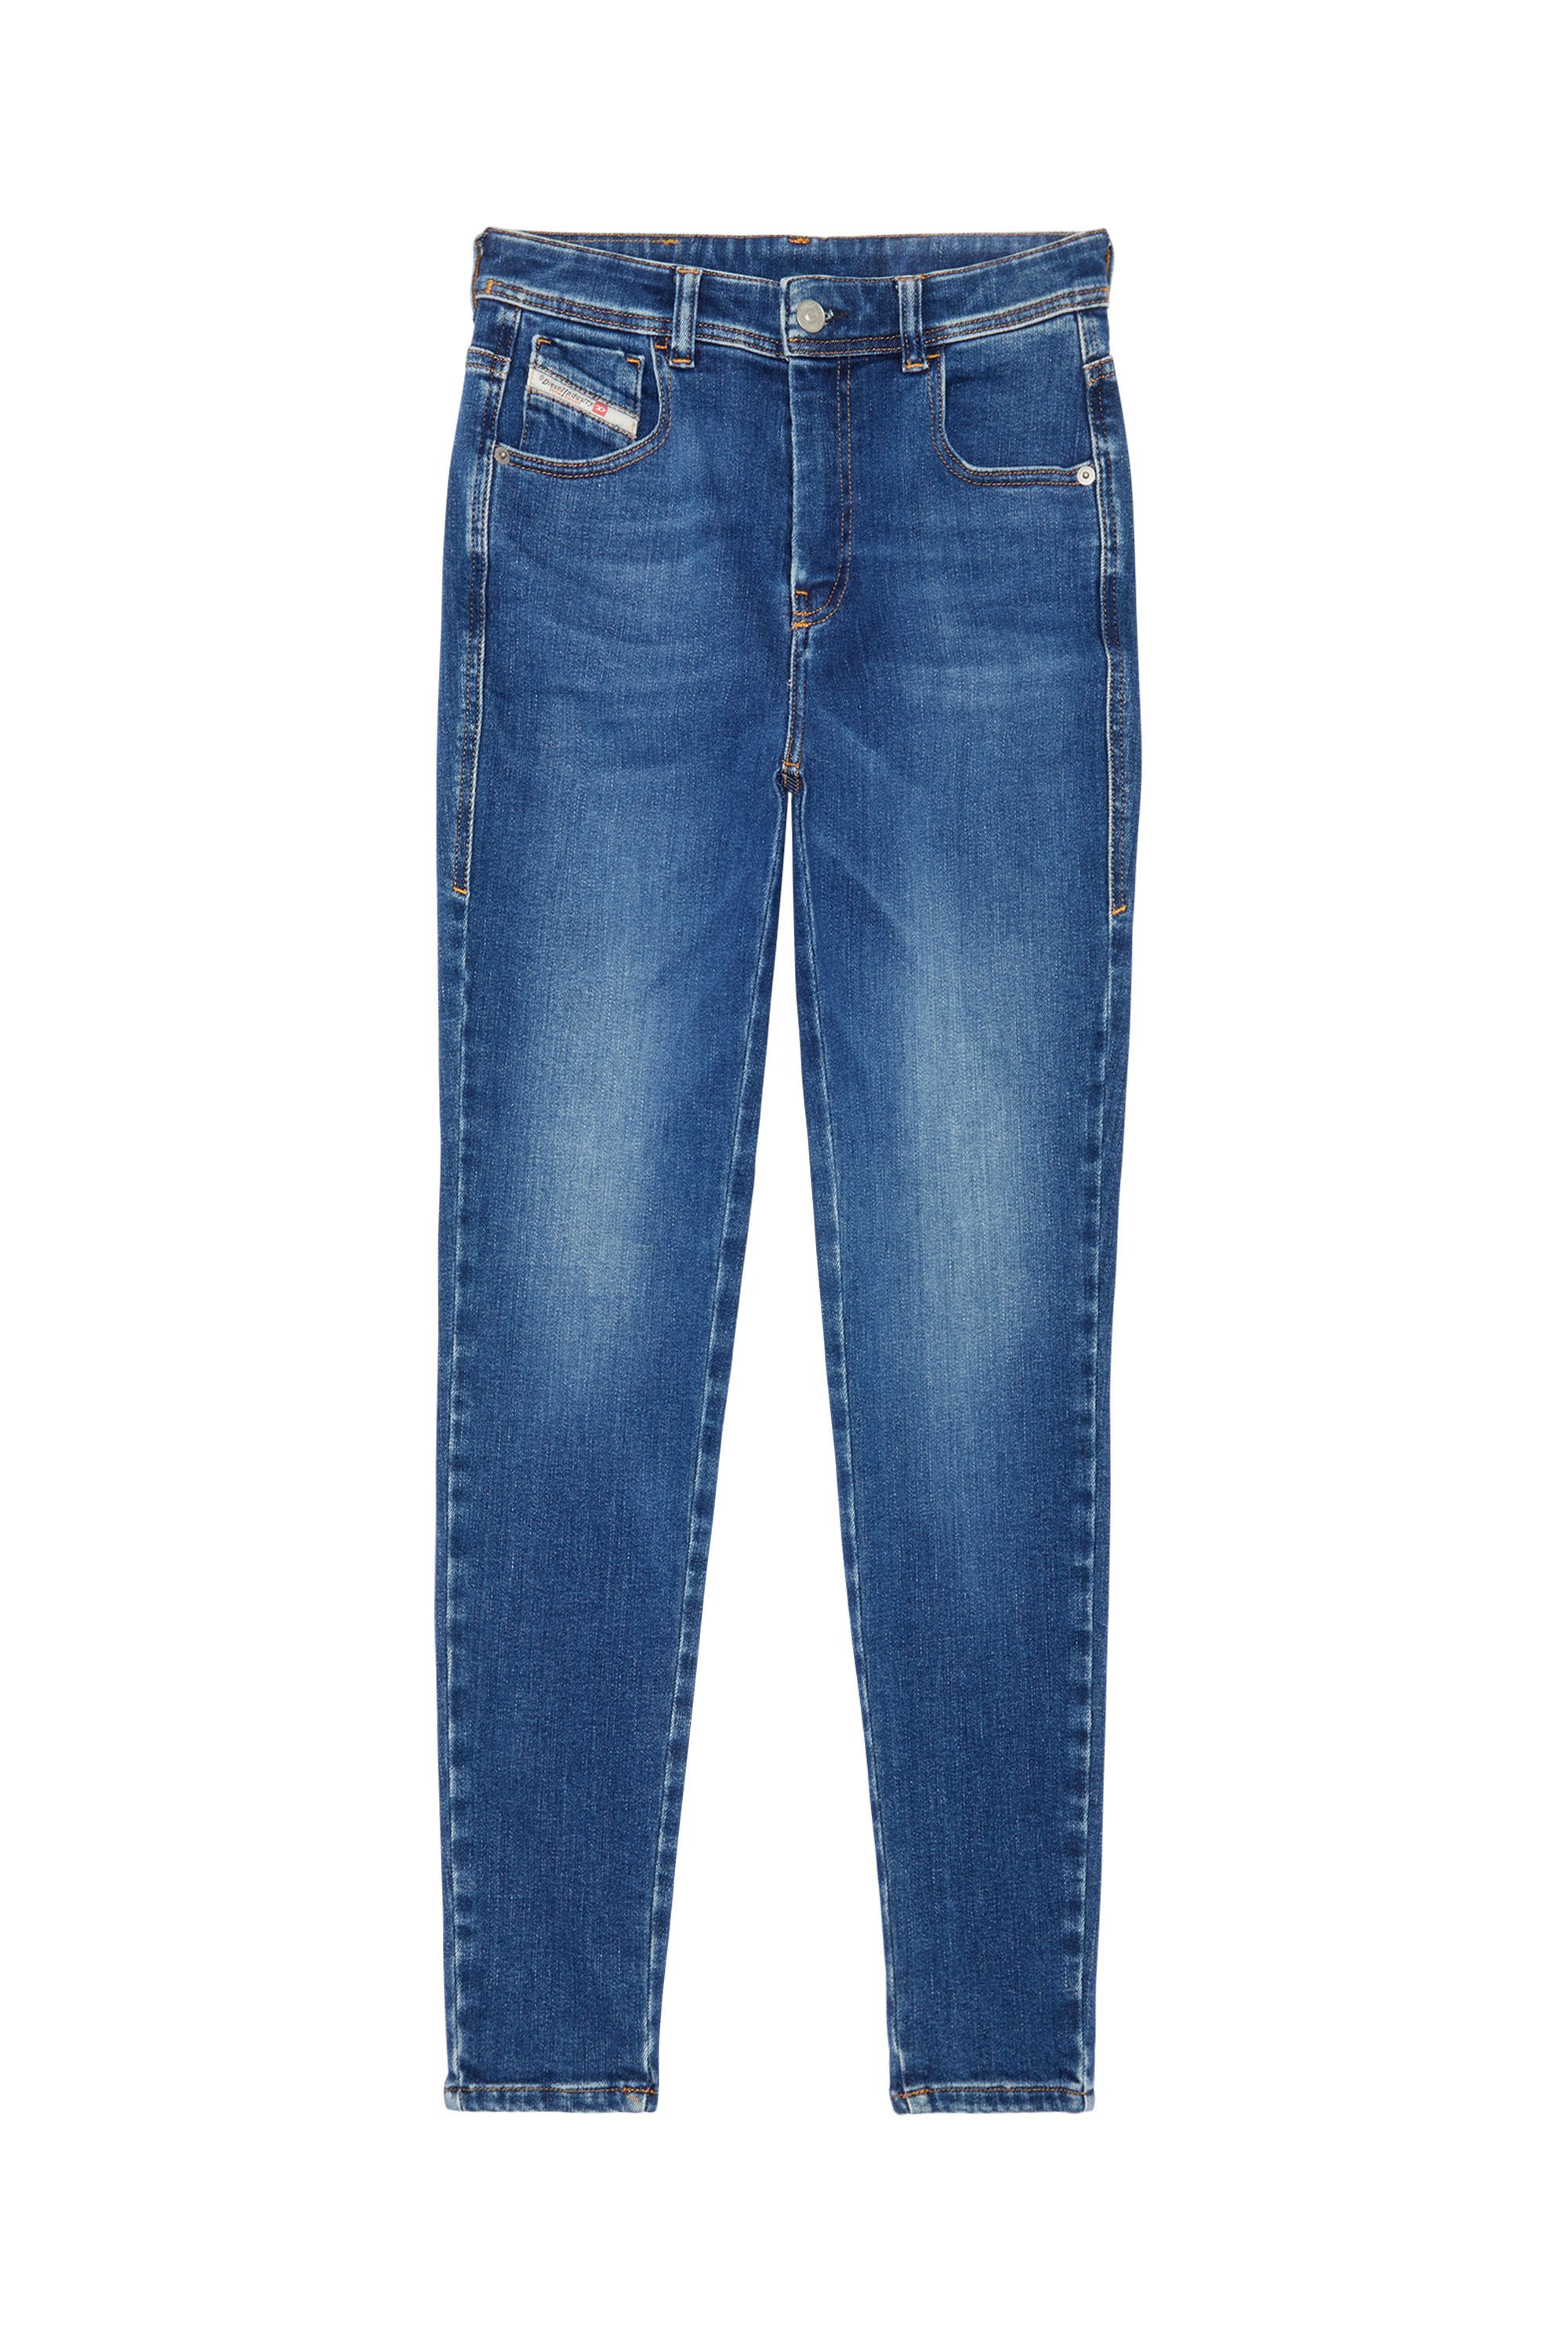 Super skinny Jeans 1984 Slandy-High 09C21, Mittelblau - Jeans